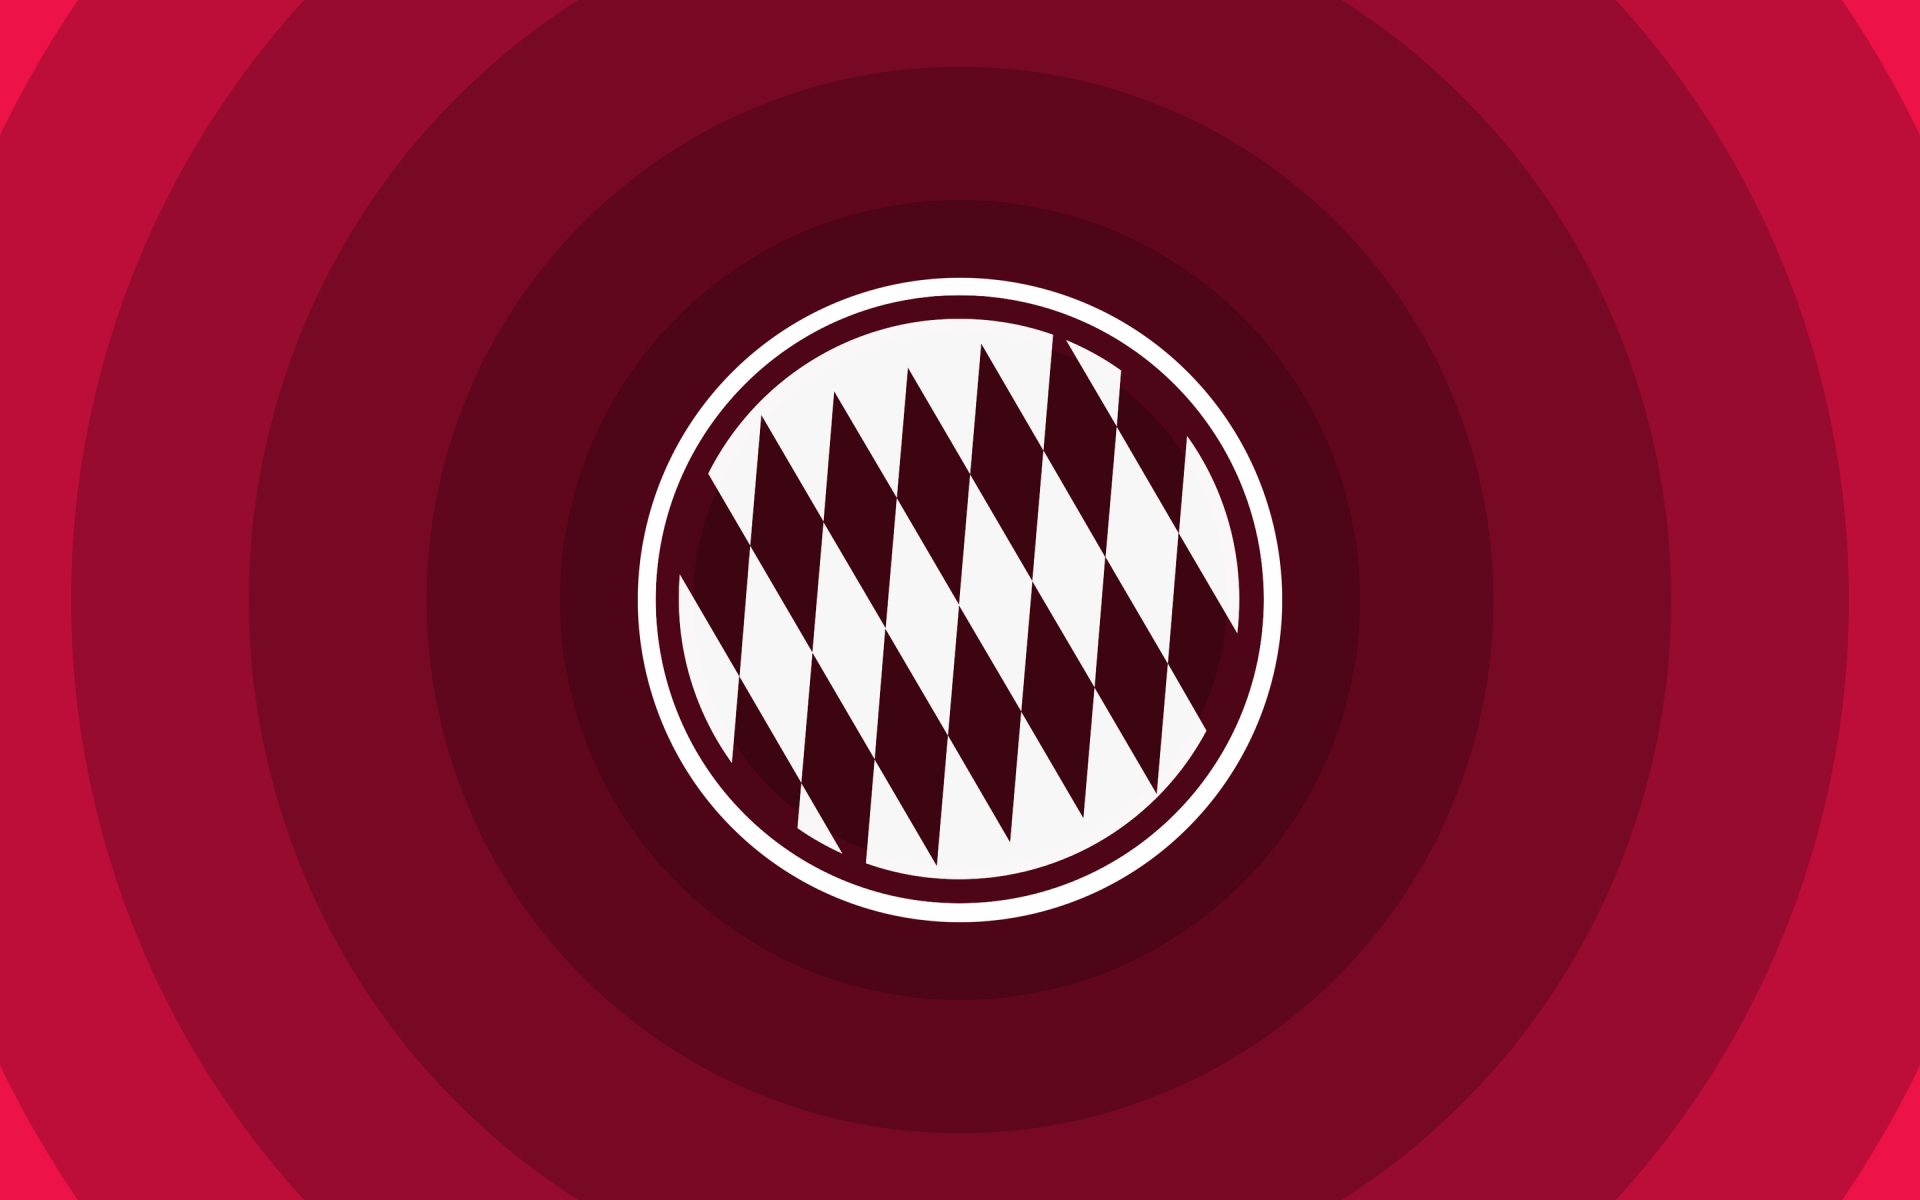 FC Bayern Munich Minimal Logo for 1920 x 1200 widescreen resolution